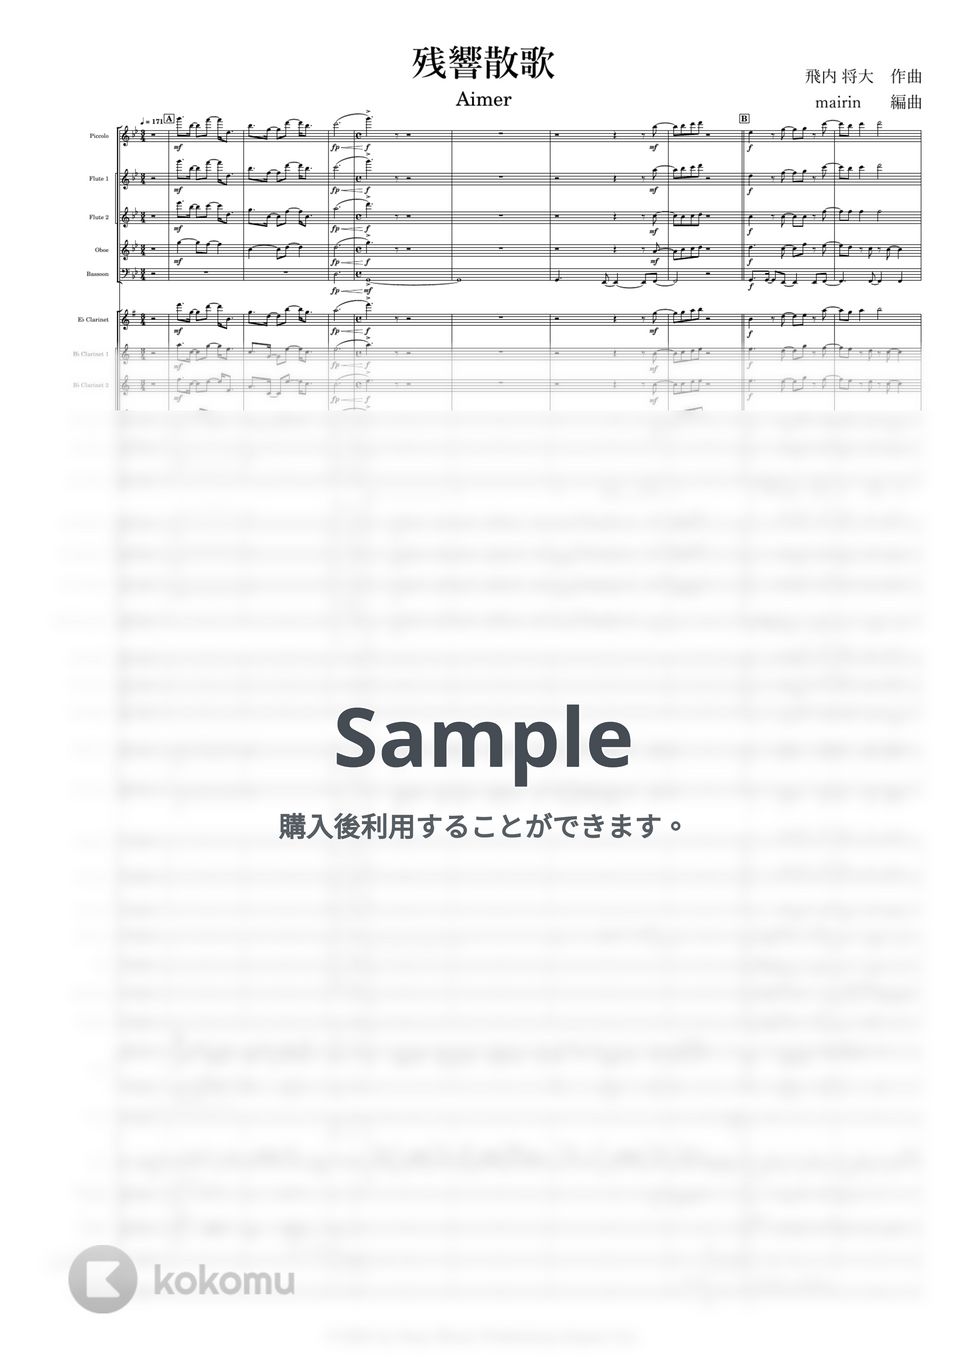 Aimer - 残響散歌 (移調Ver.) (吹奏楽 Lv.4.5) by mairin